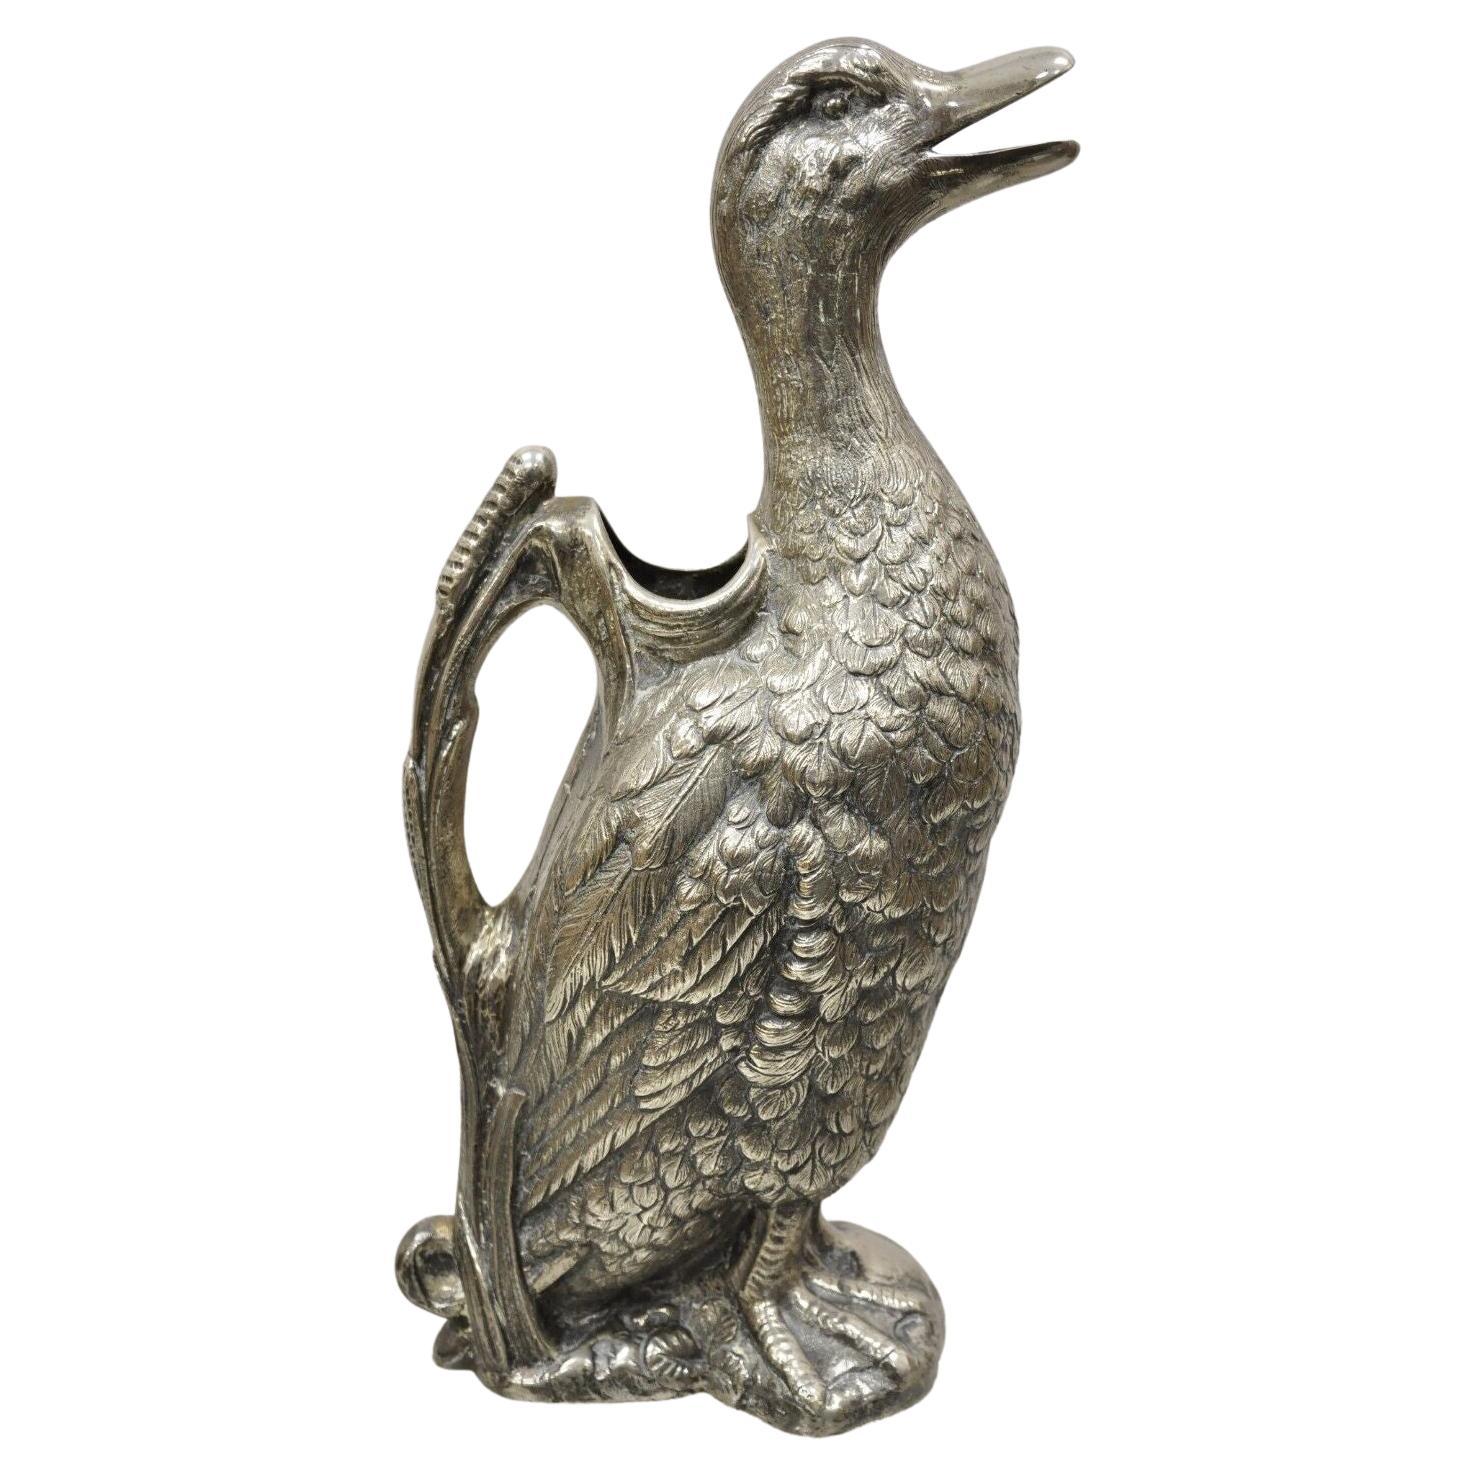 Vintage Alpaka Ente Stockente Figural Versilbertes Wasser Krug Karaffe